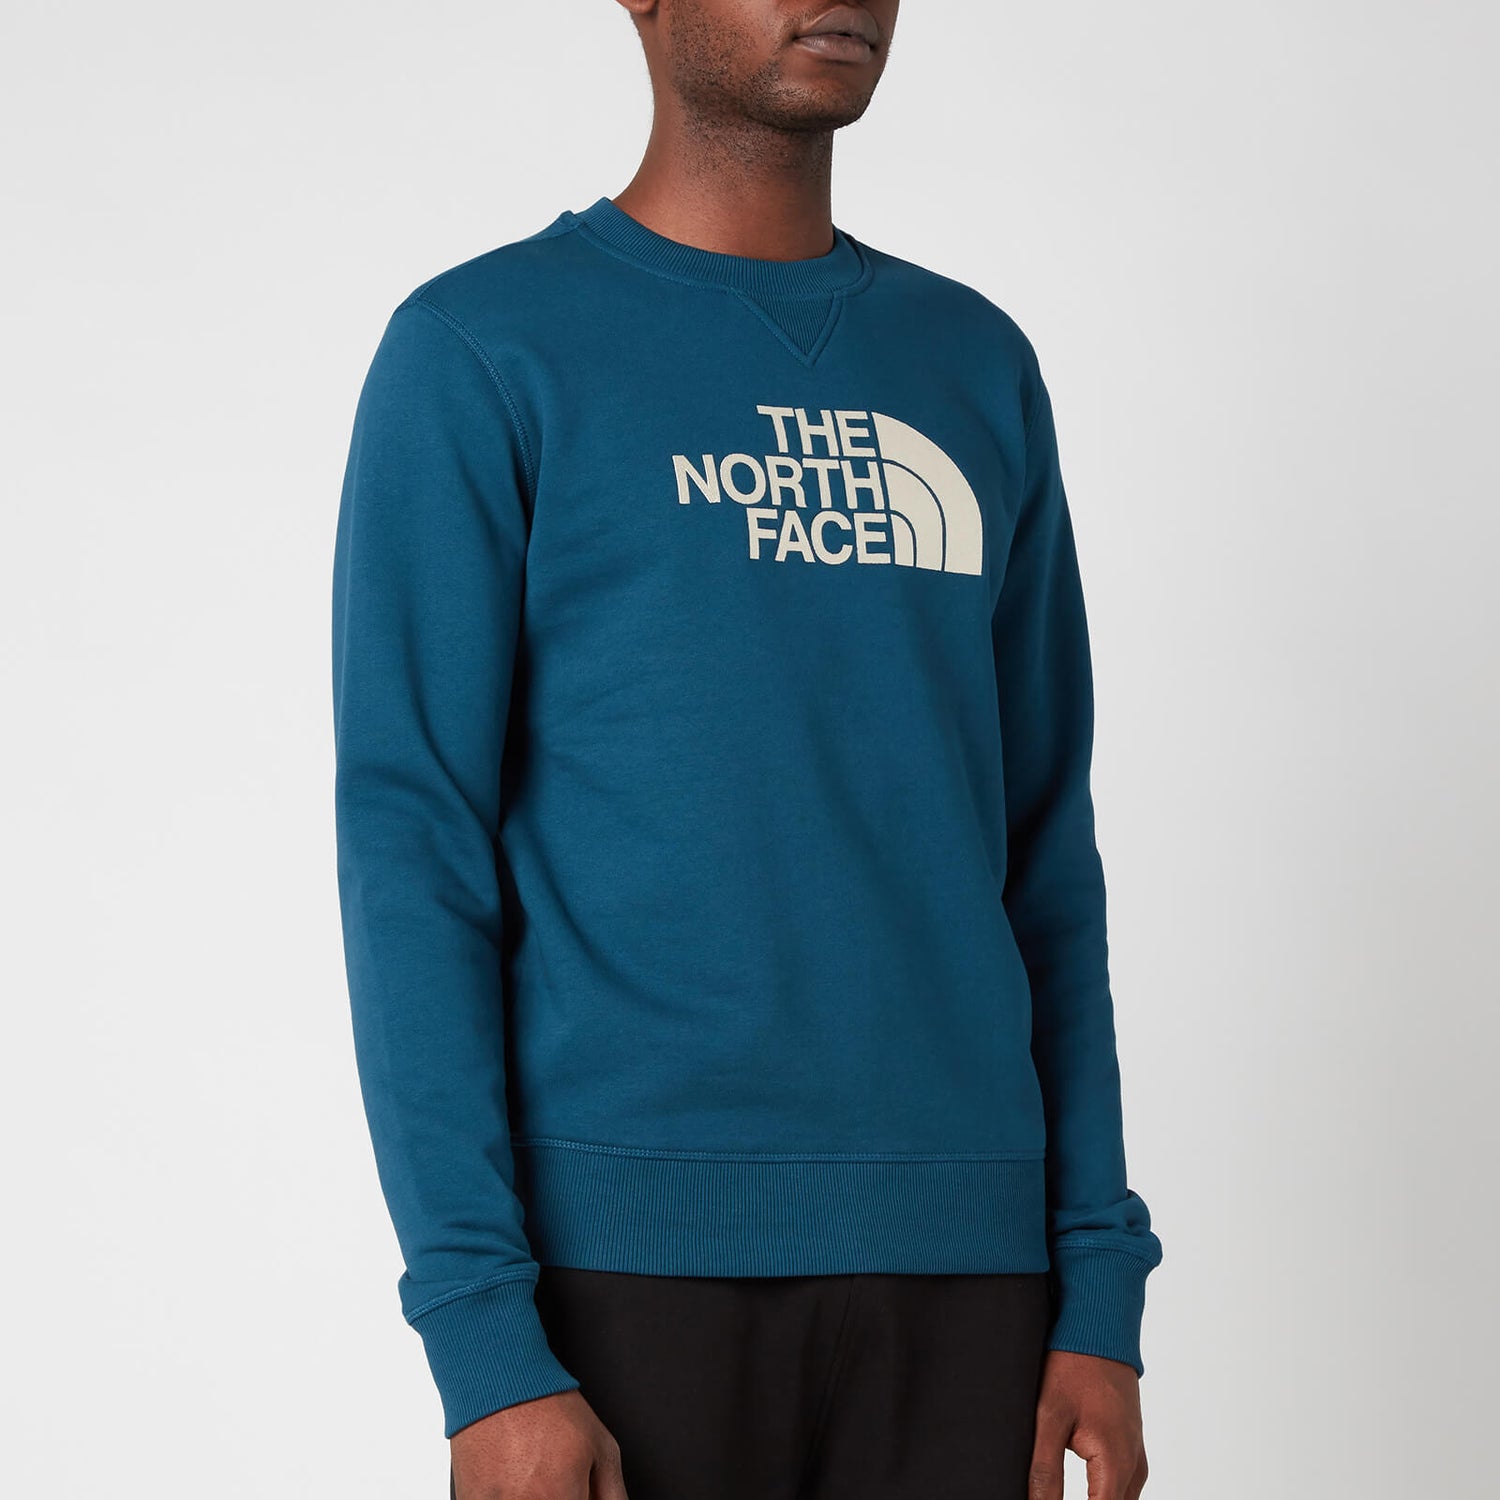 The North Face Men's Drew Peak Sweatshirt - Monterey Blue